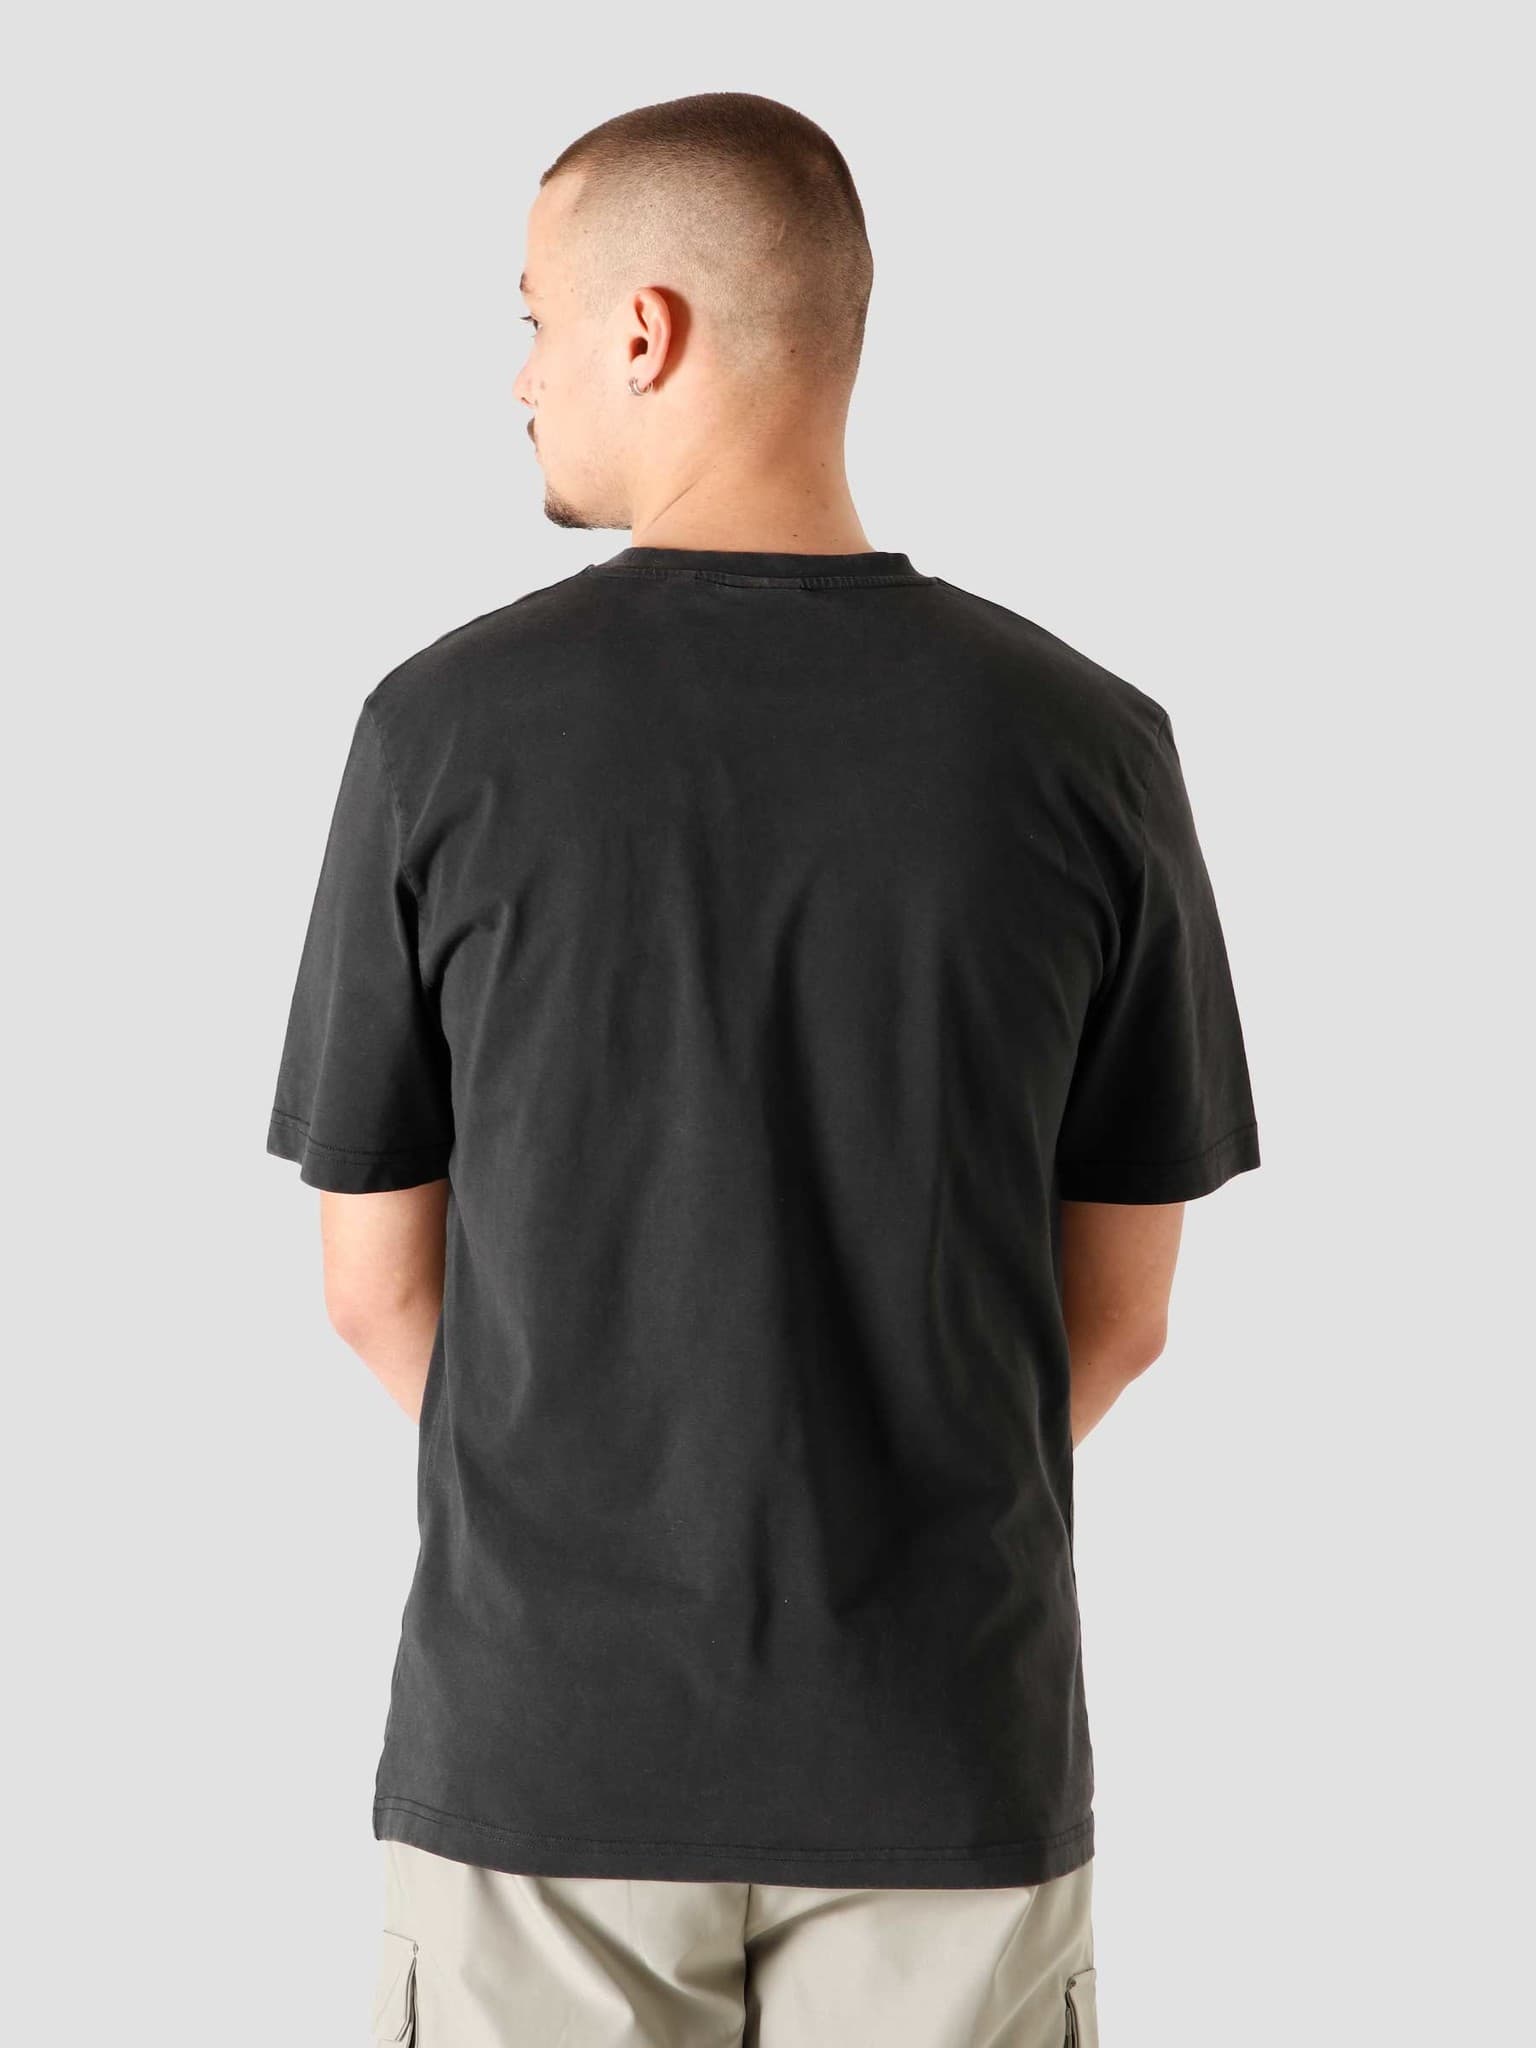 Hoyouth T-Shirt Black 2021306